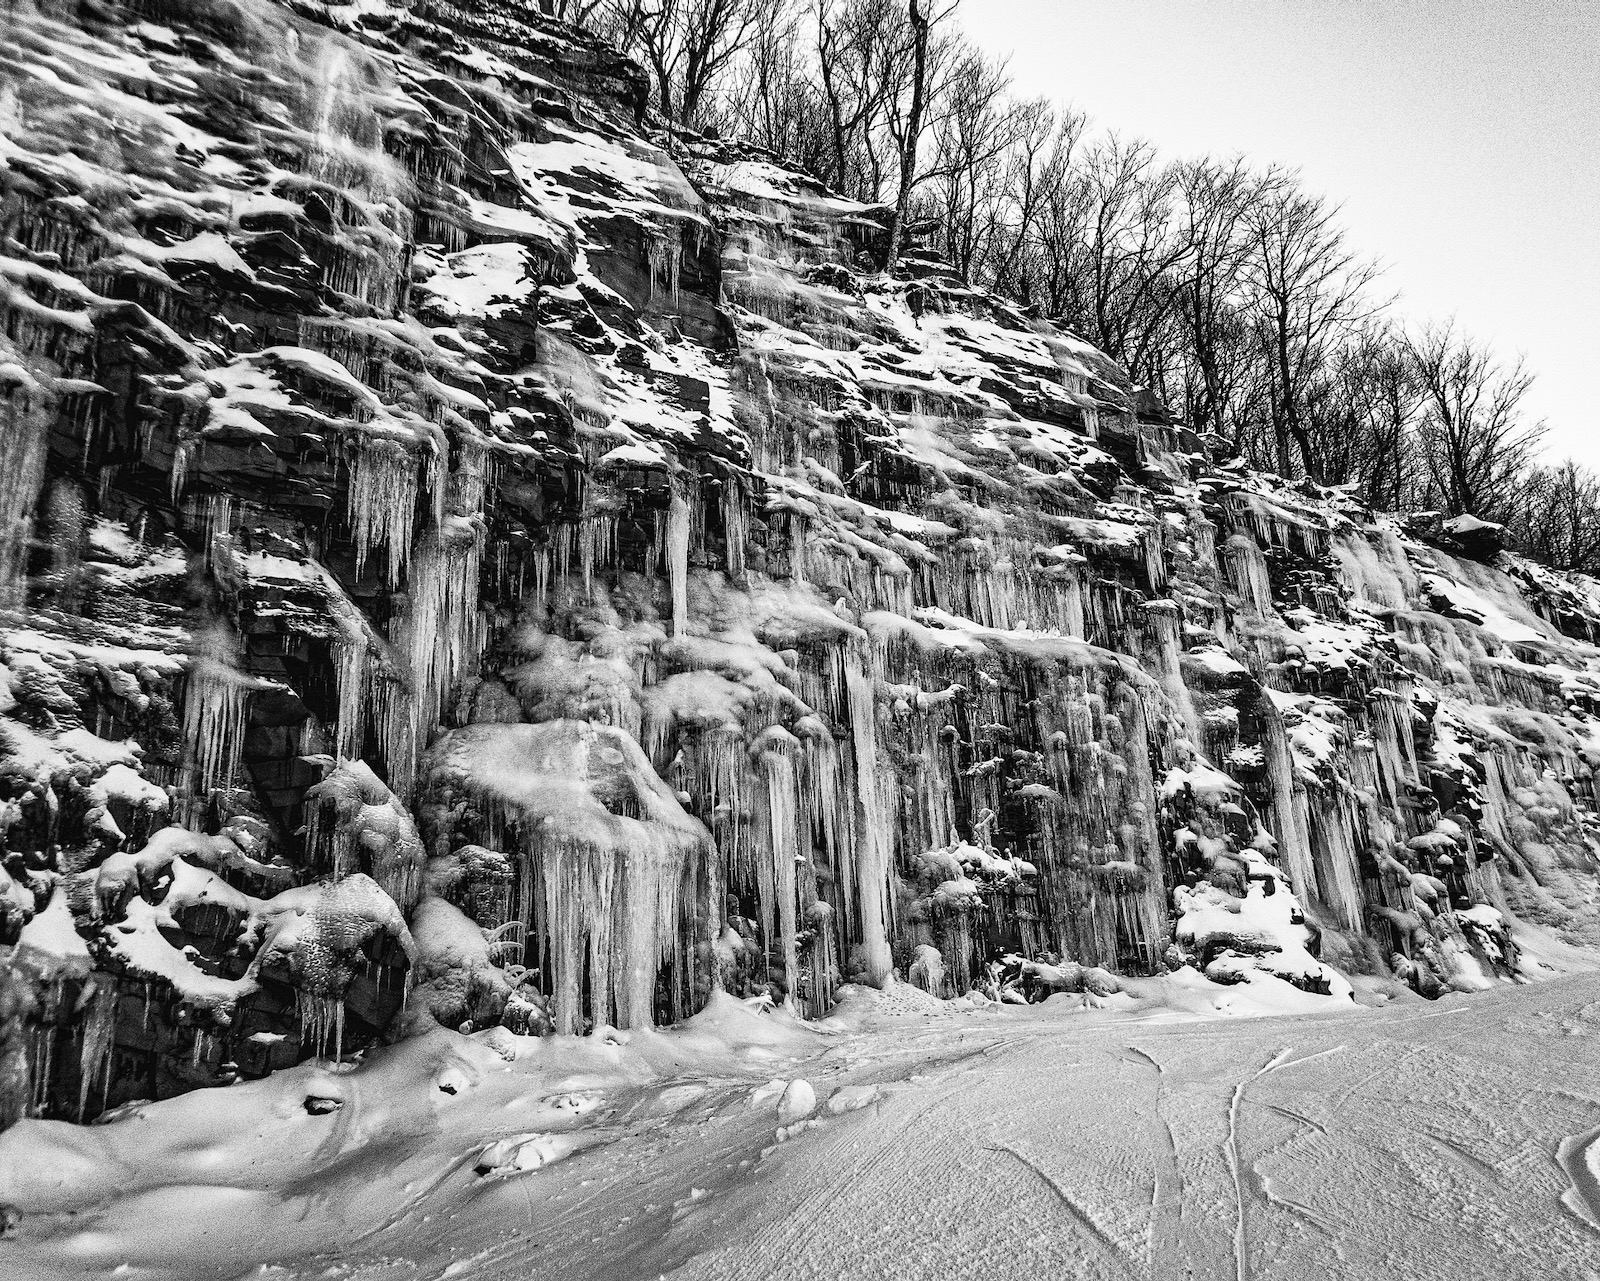 Icy cliffs of Belt Parkway